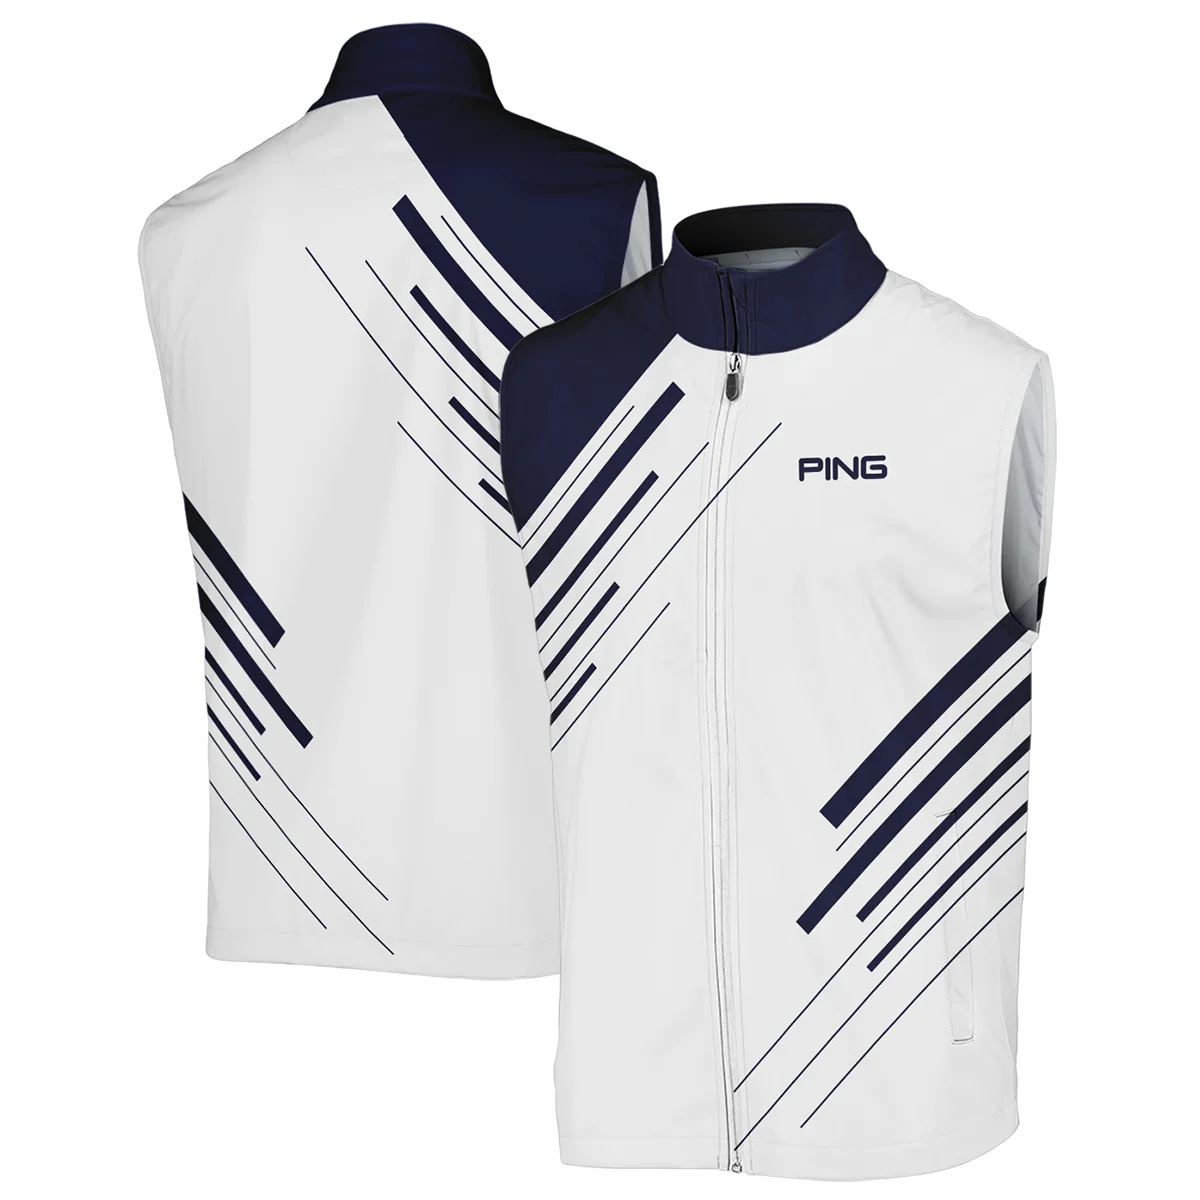 Ping 124th U.S. Open Pinehurst Golf Unisex Sweatshirt Striped Pattern Dark Blue White All Over Print Sweatshirt